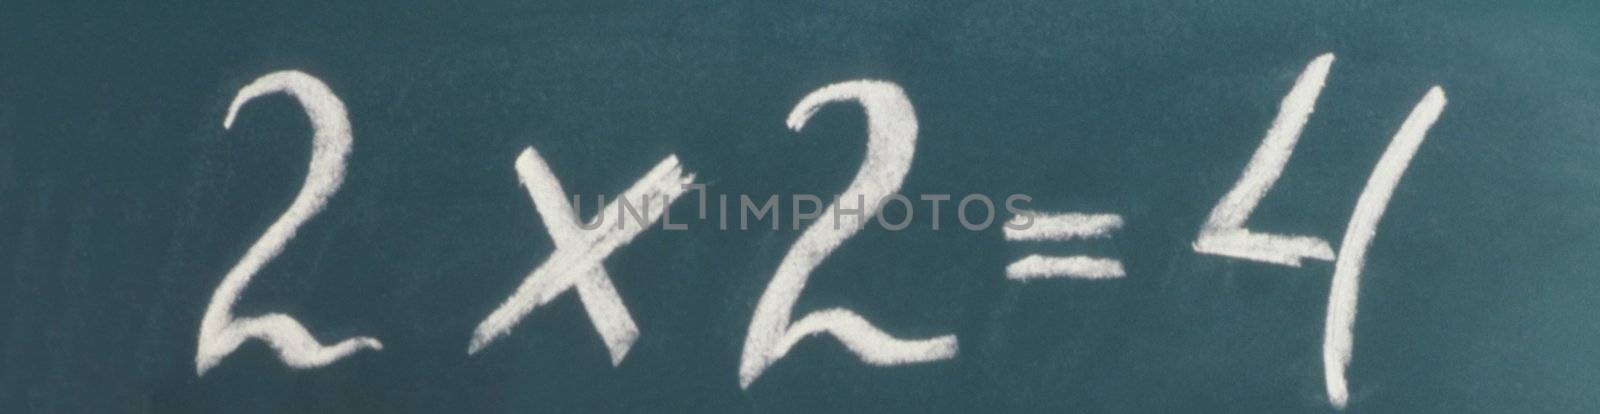 A chalkboard on white with "2 * 2=4" written on it.